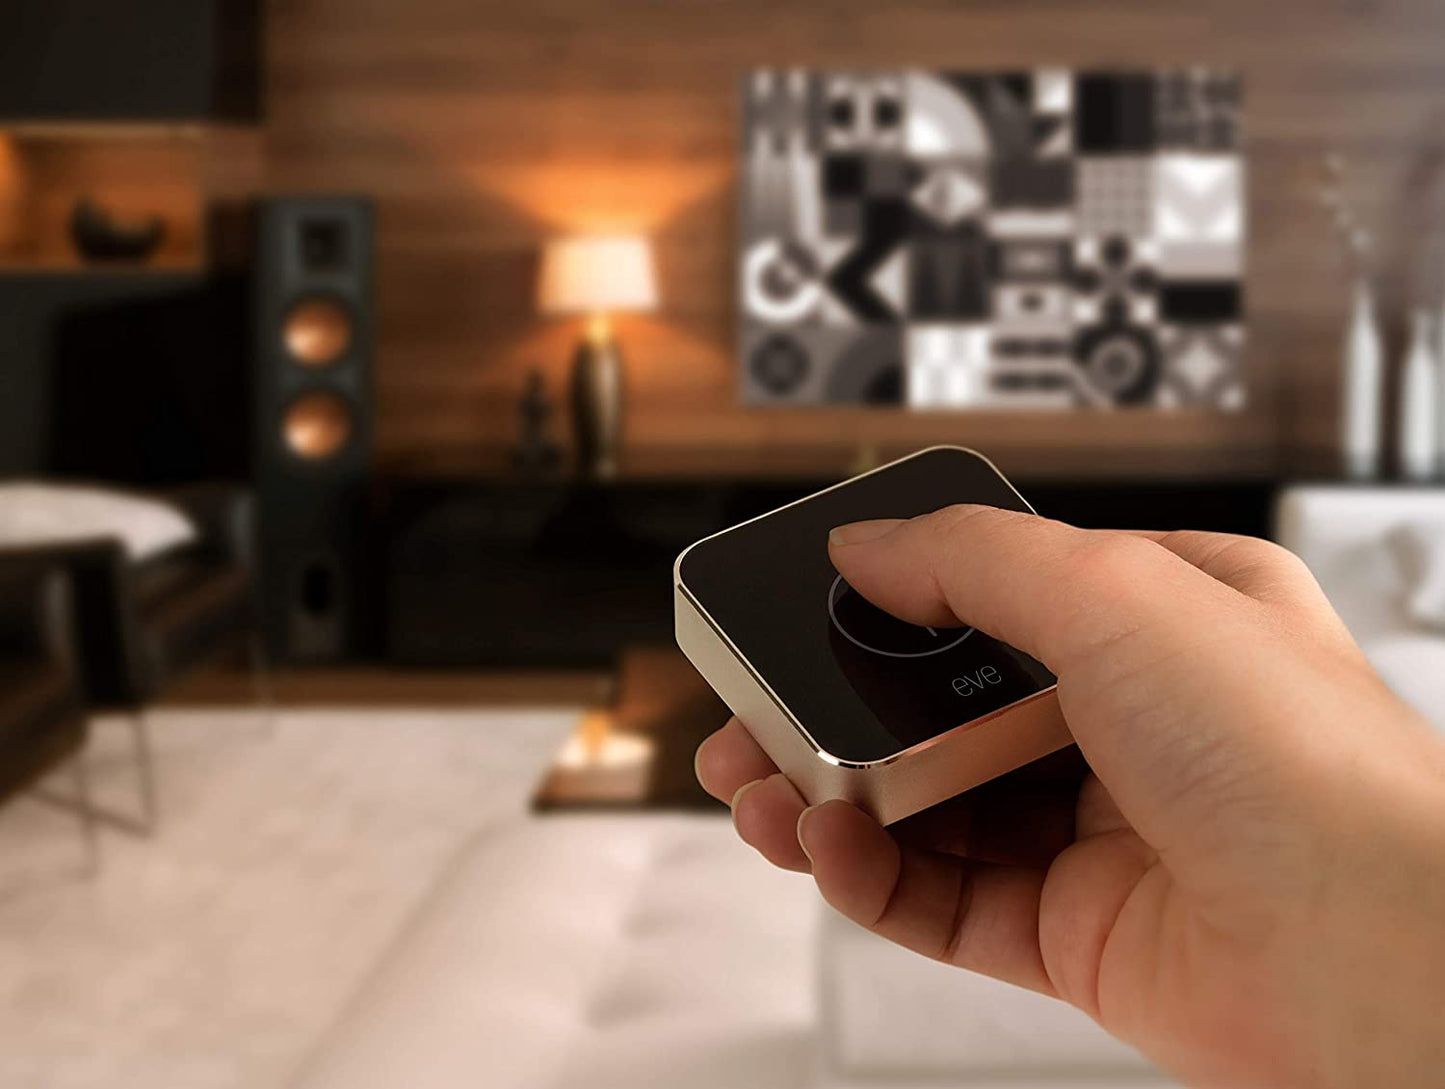 Eve Button - Smart Remote Kit - Apple Homekit Compatible